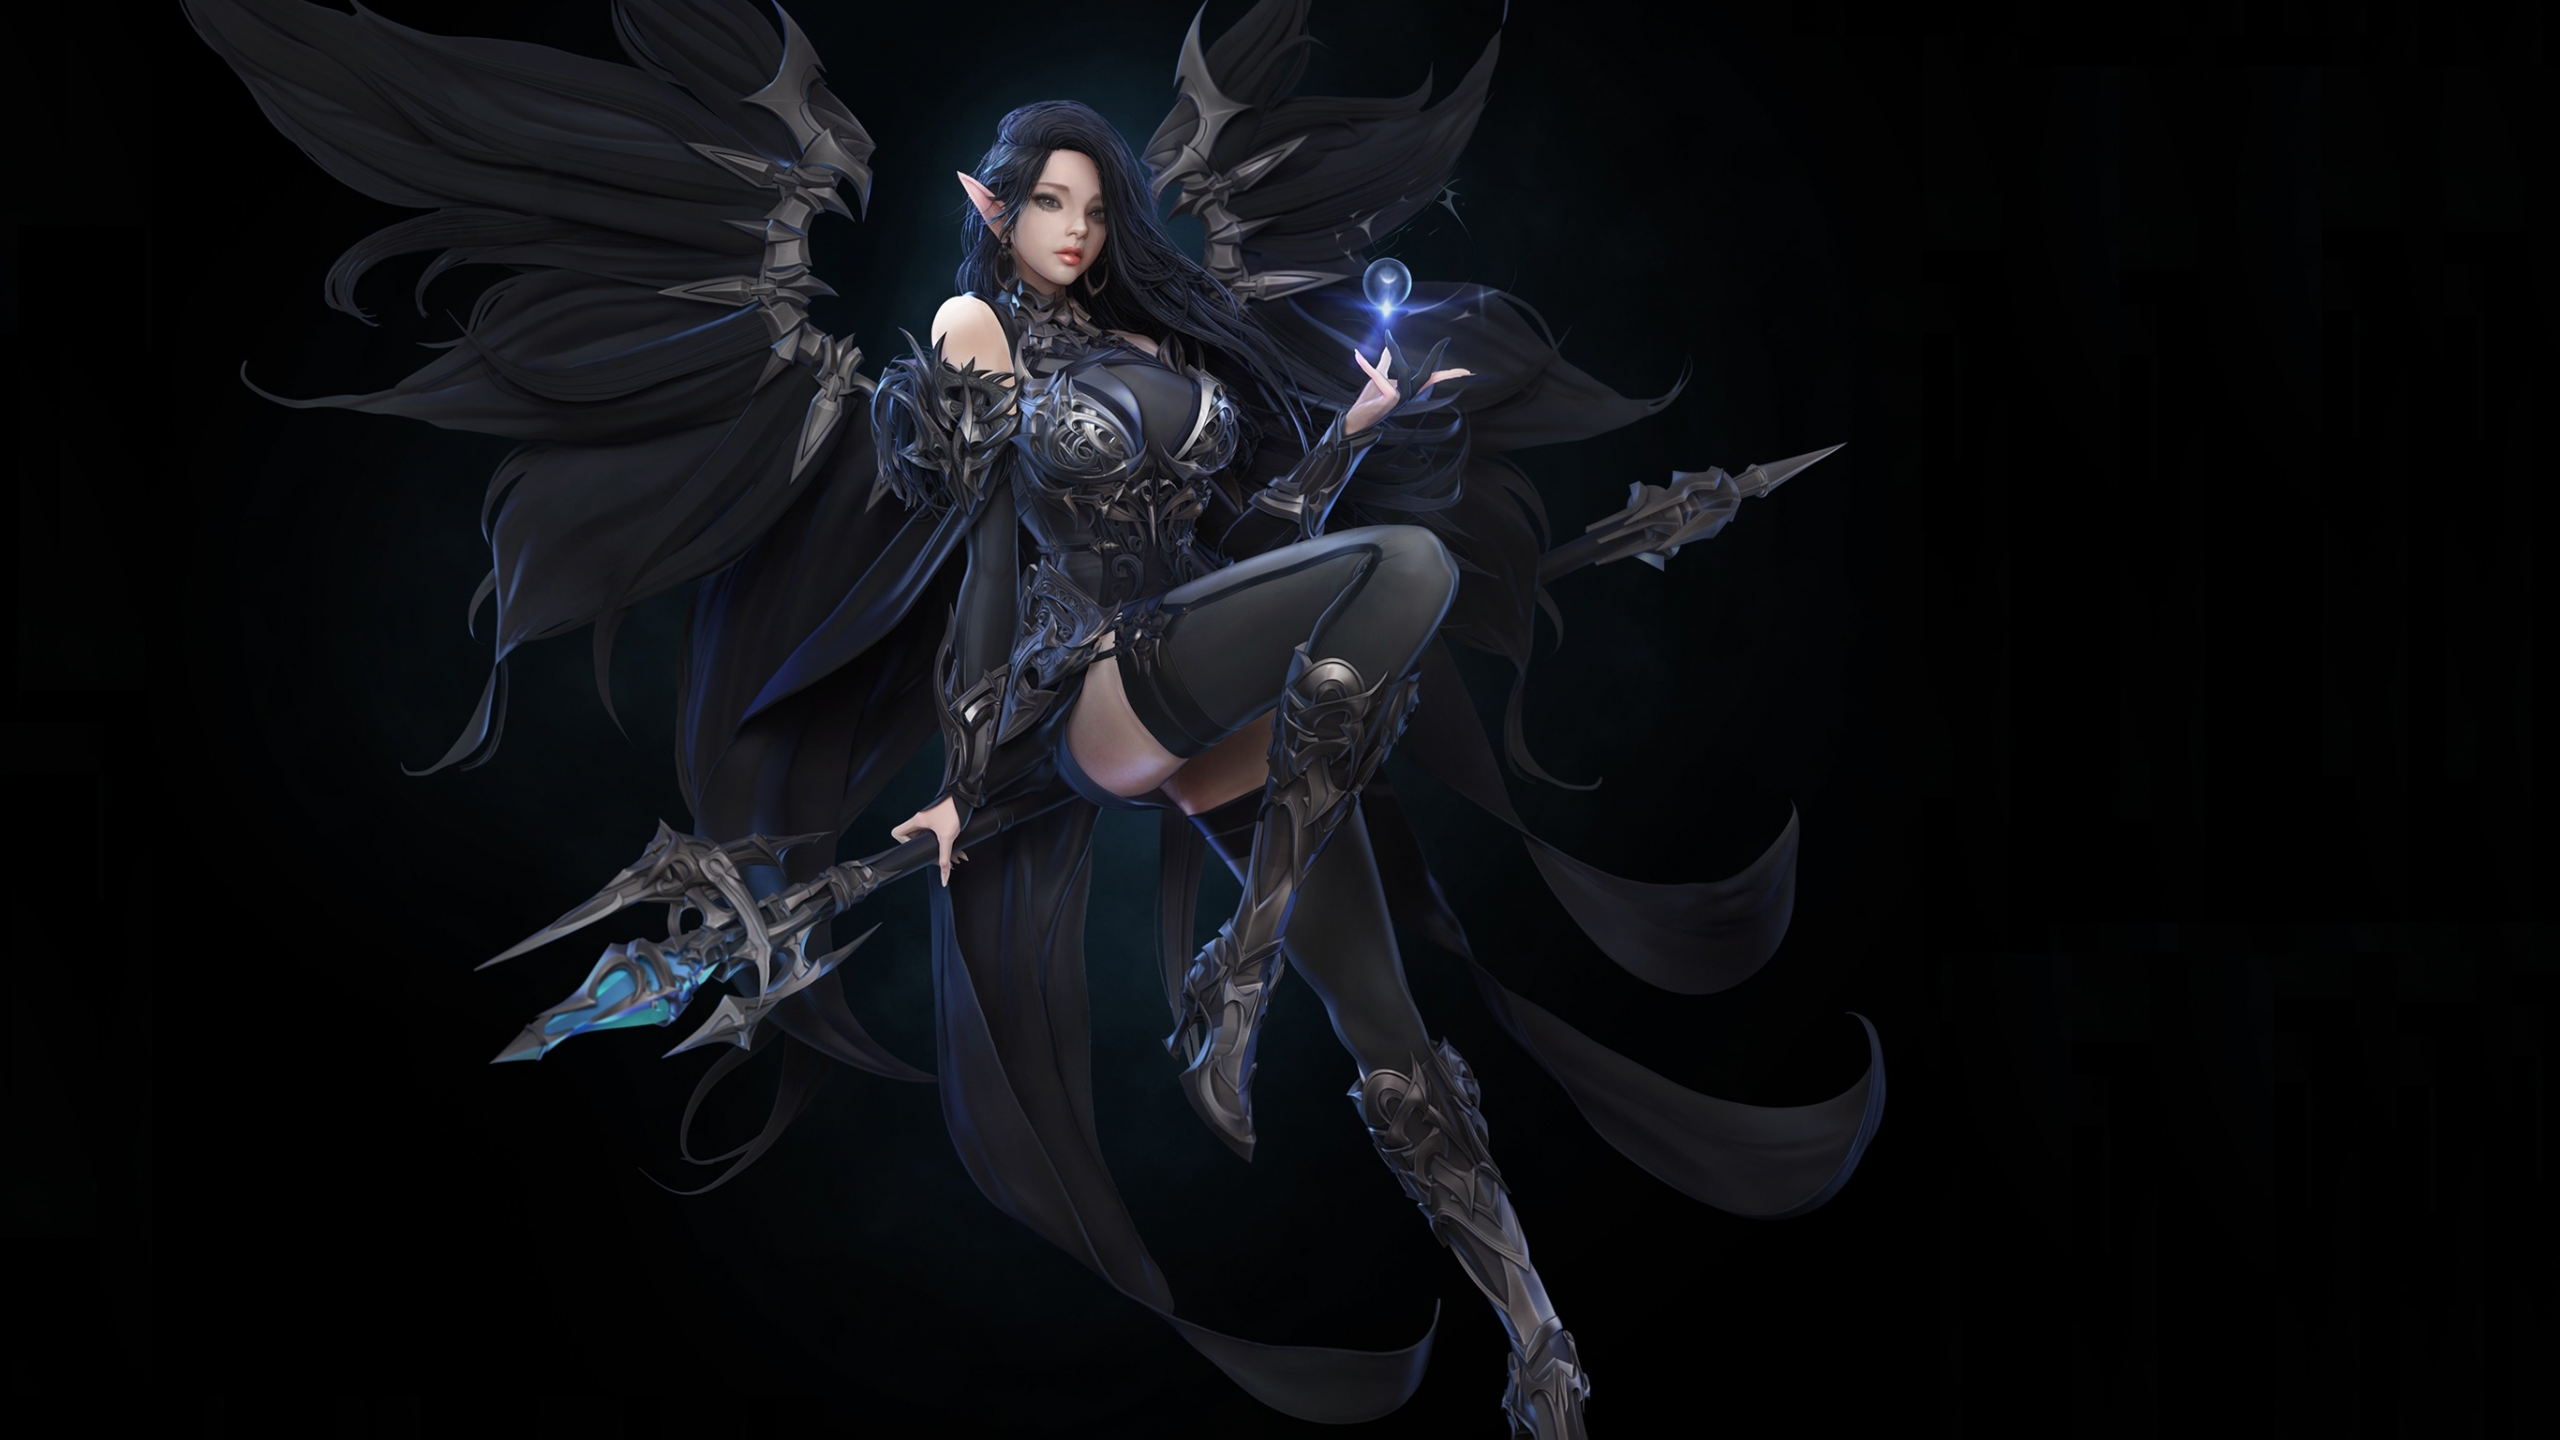 General 2560x1440 CGI fantasy art fantasy girl dark hair black background simple background